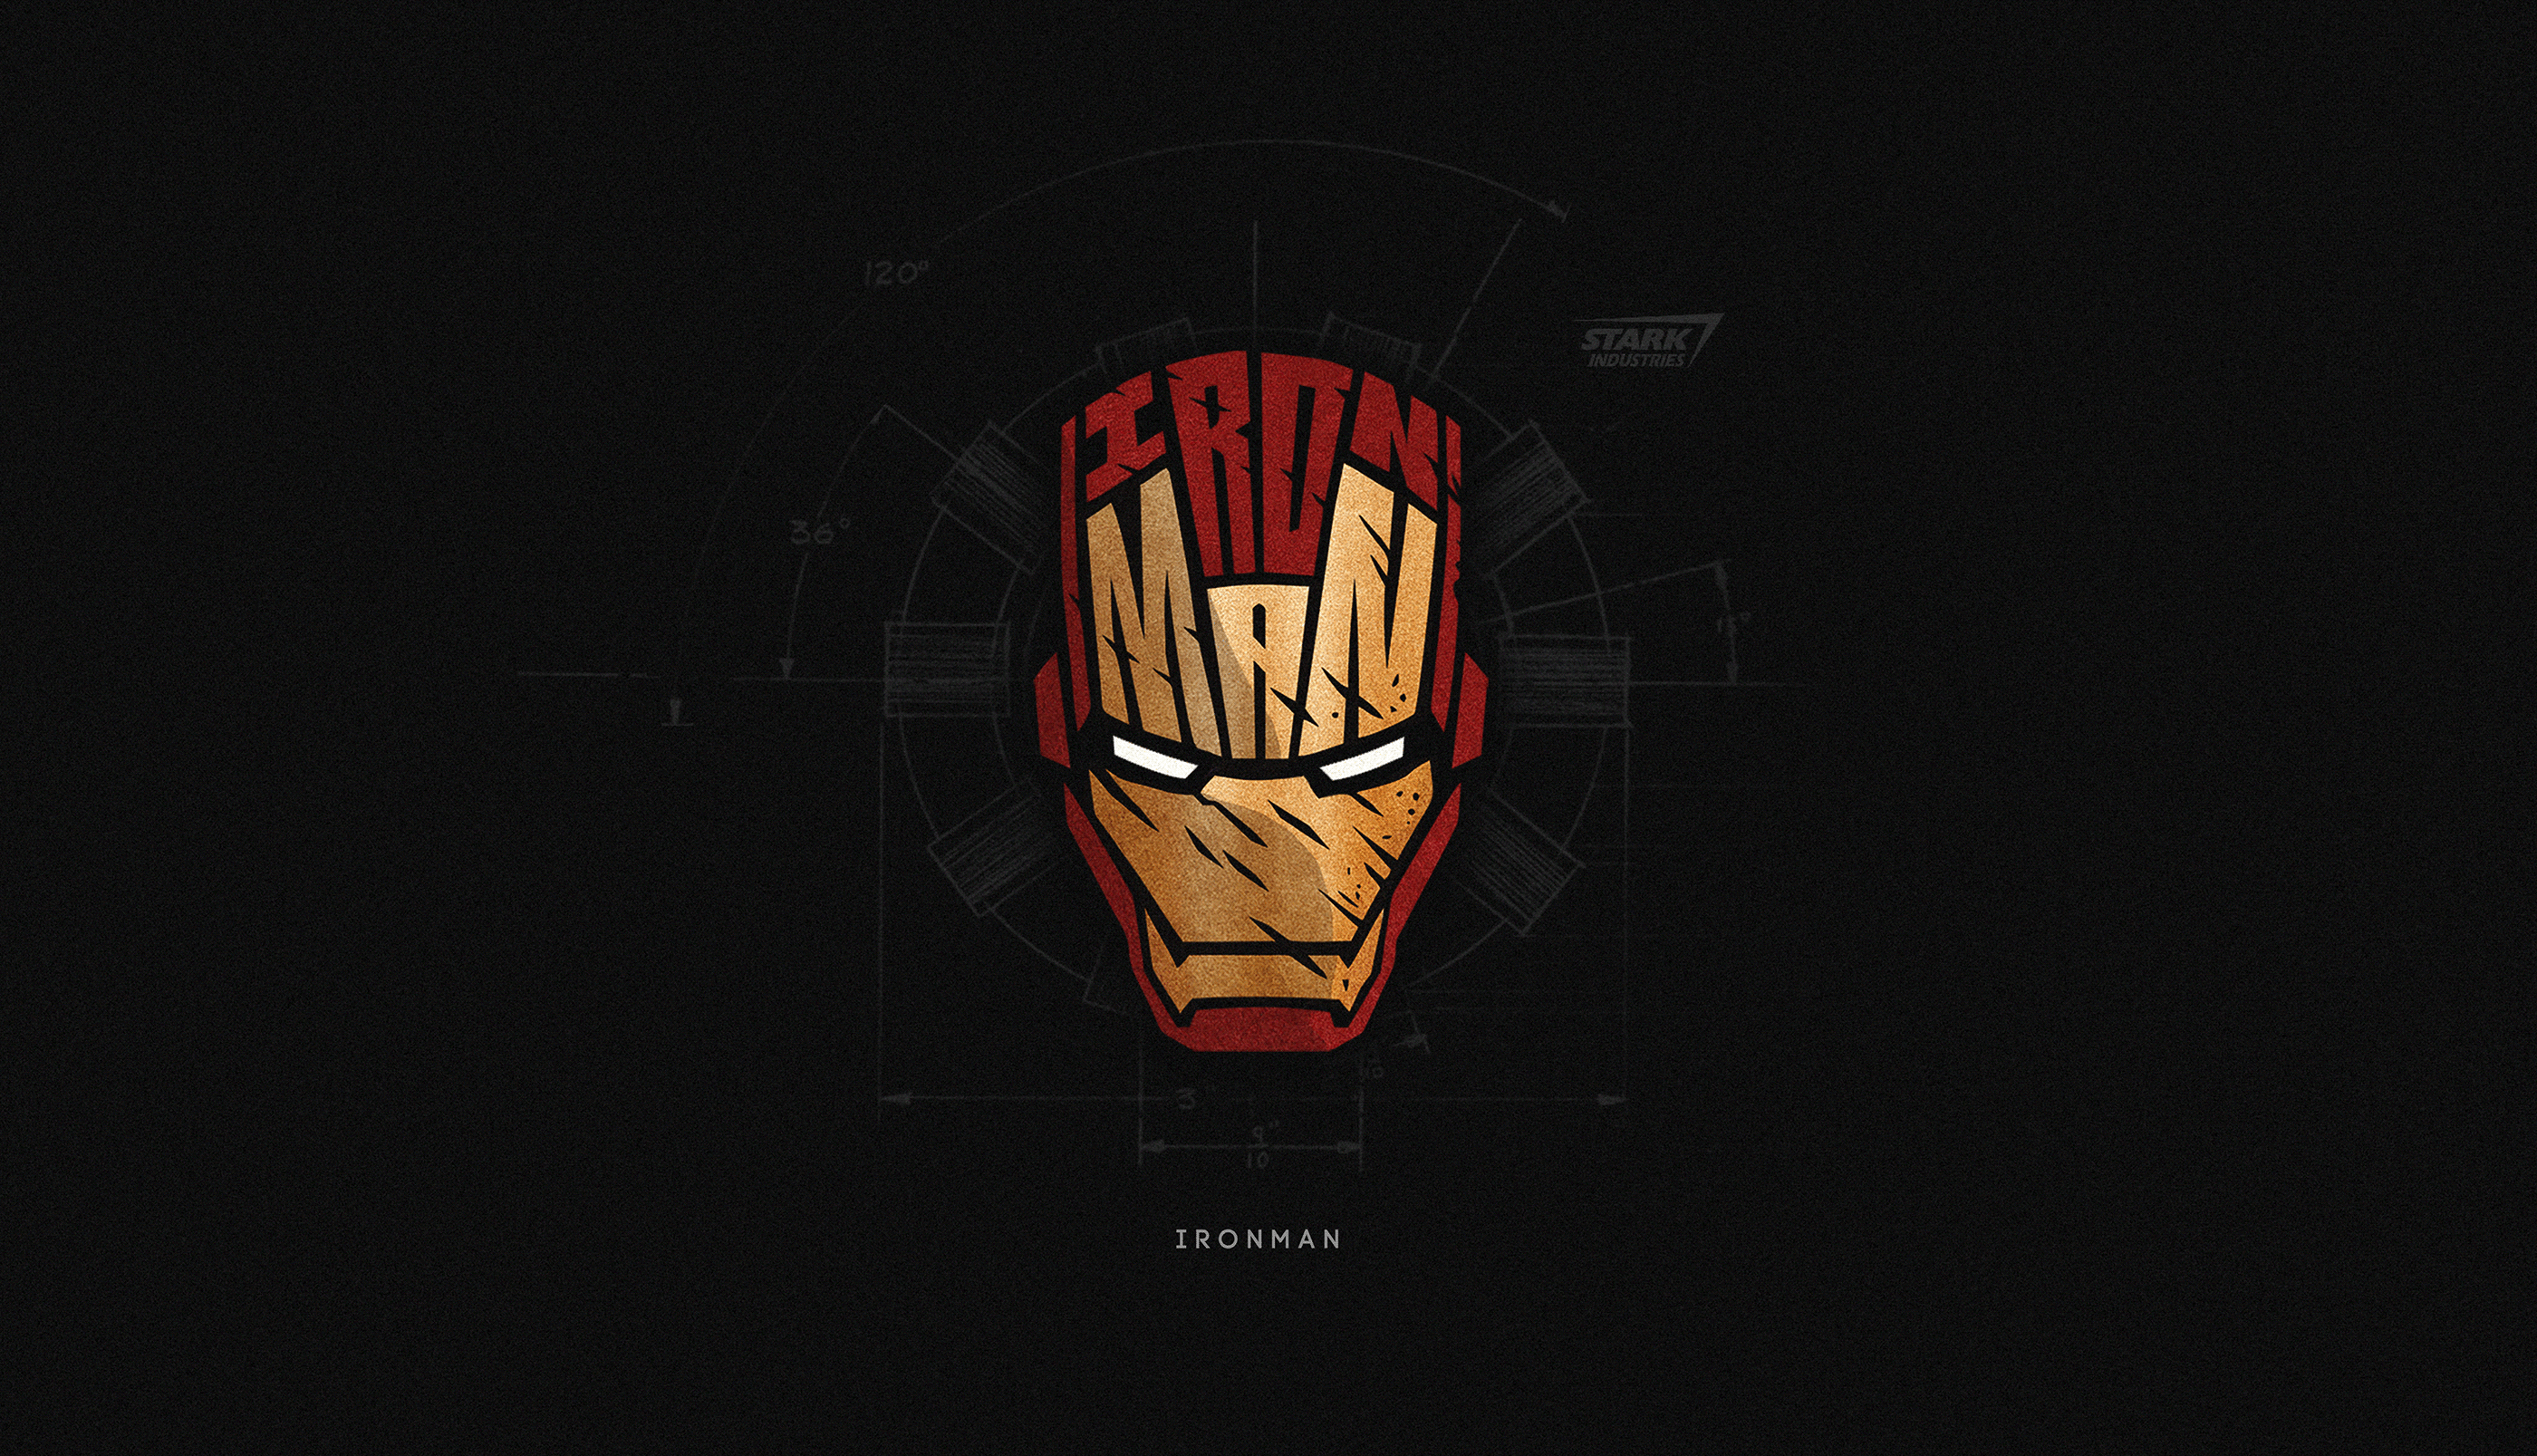 General 2800x1607 digital art illustration artwork collections logo Iron Man movie characters Marvel Comics helmet Stark Industries minimalism simple background